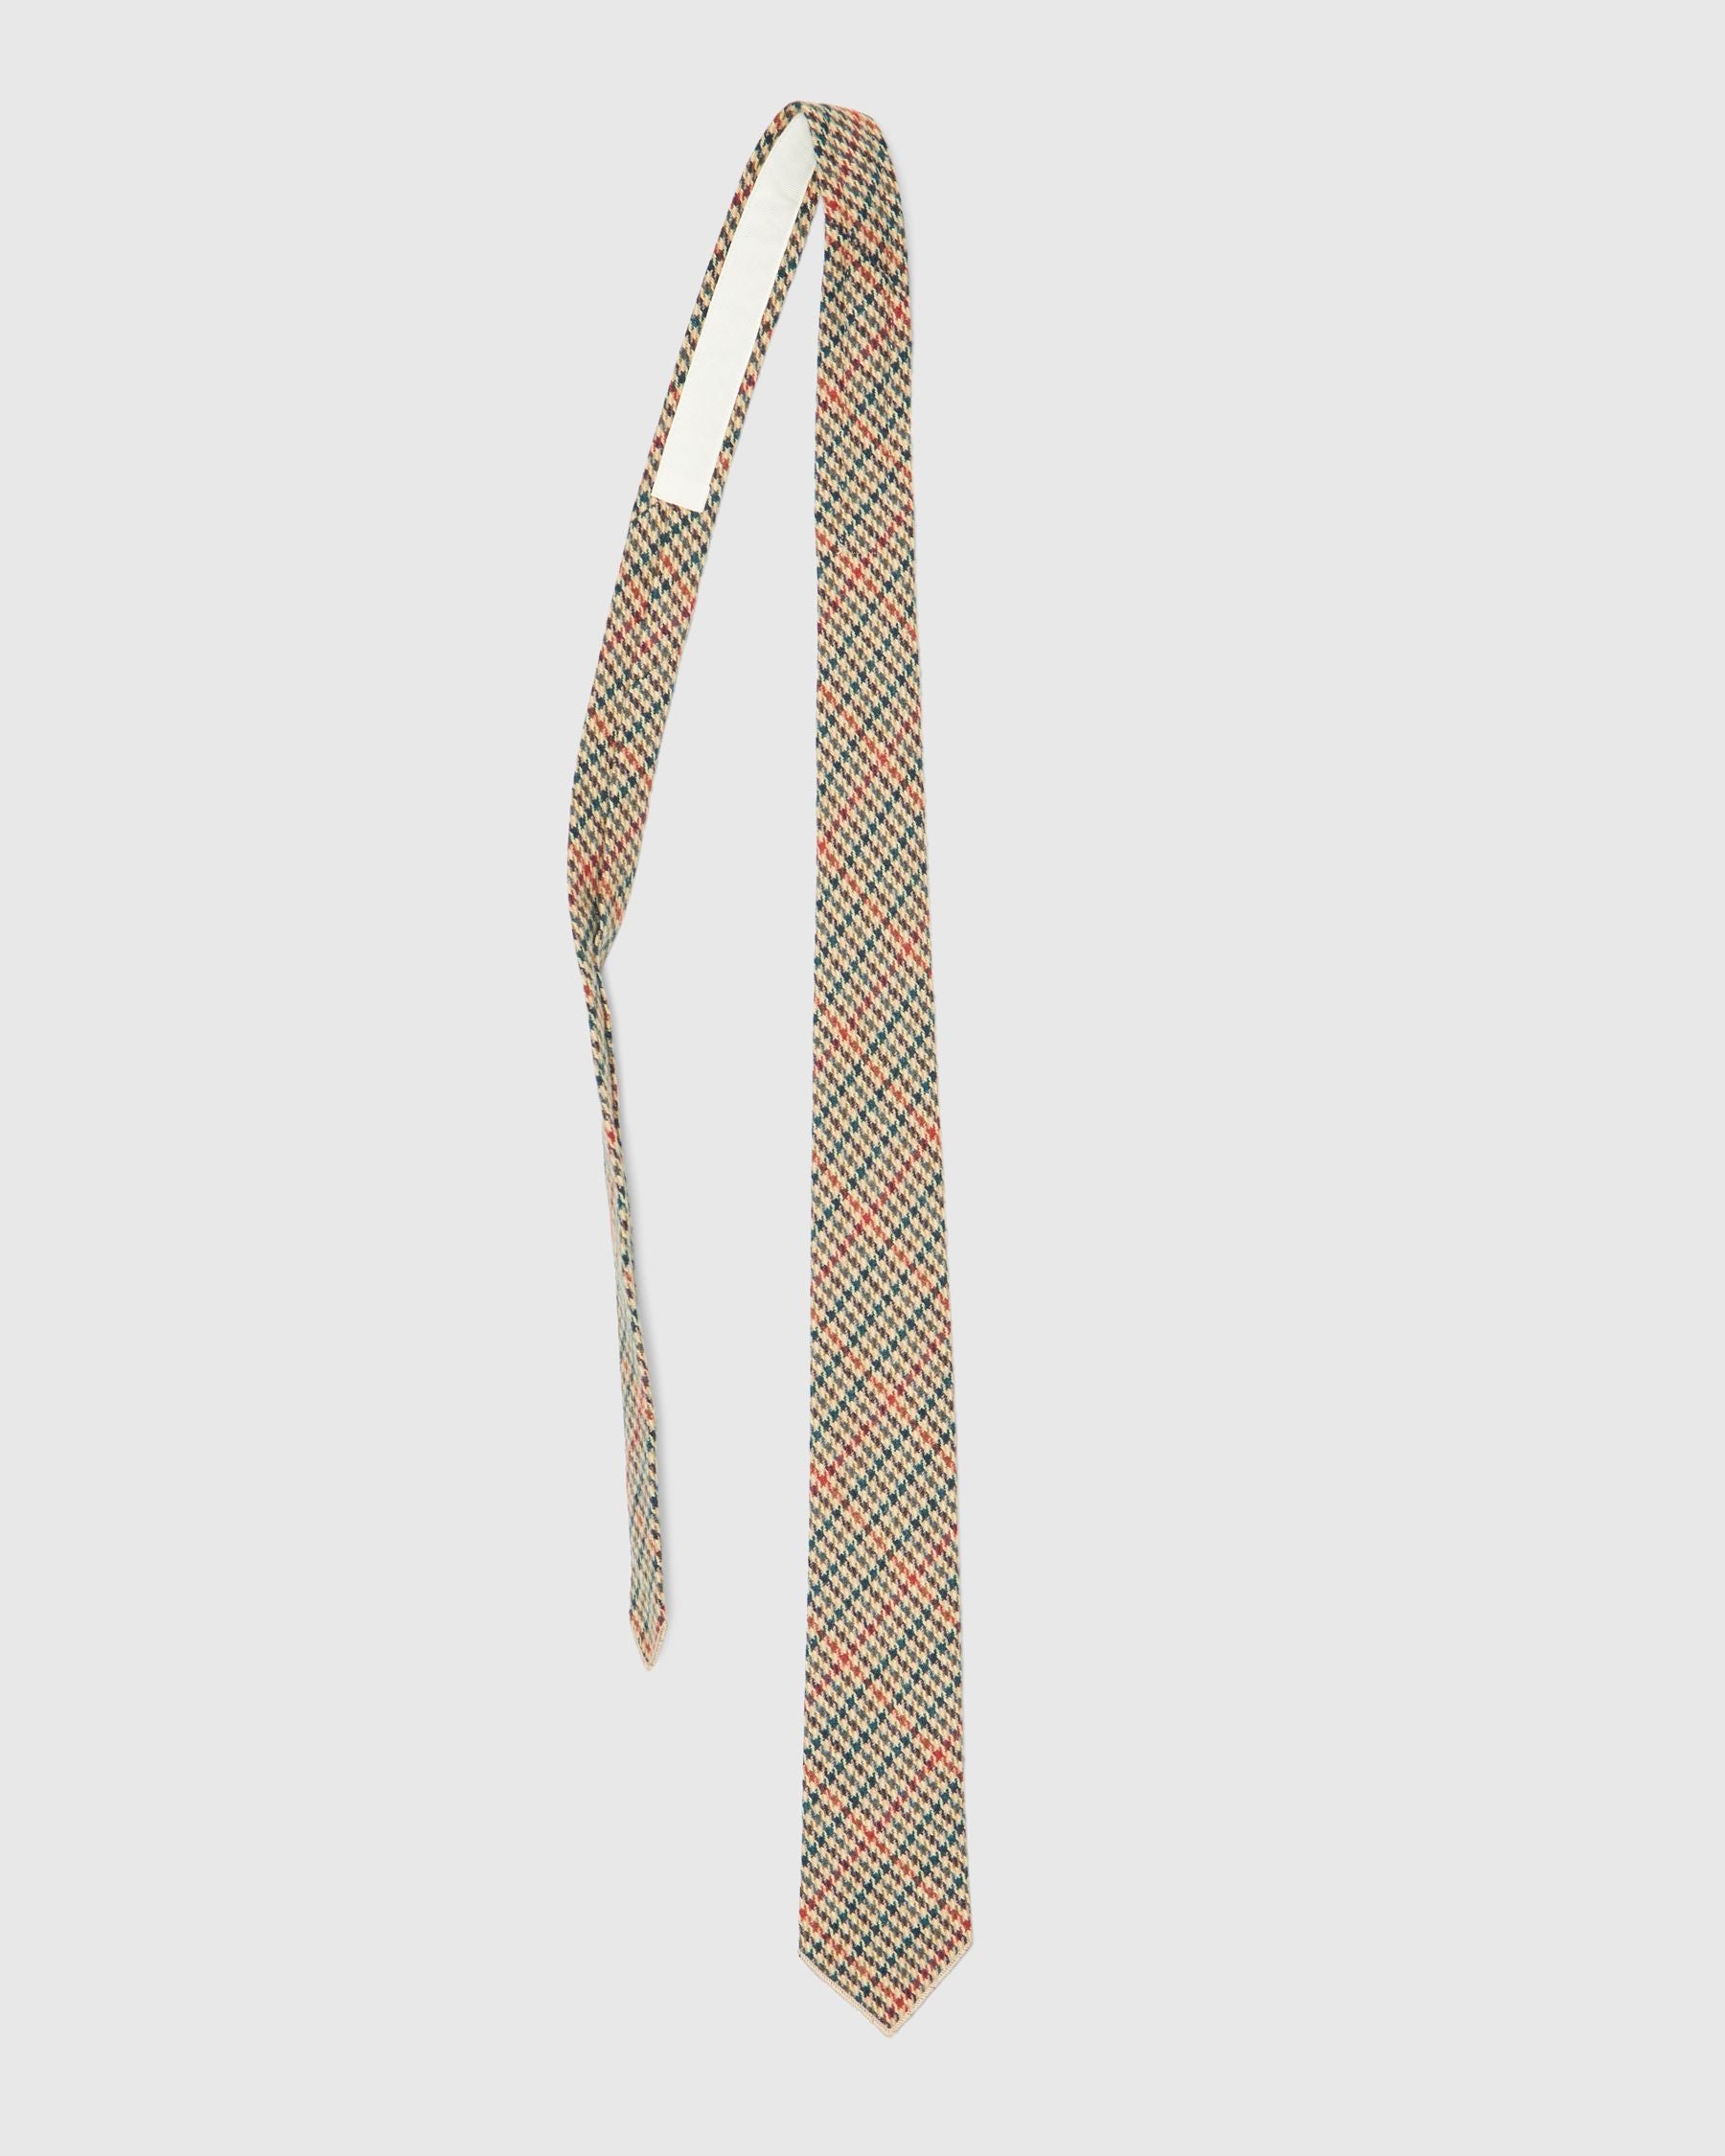 Neck Tie in Khaki Acrylic Wool Gunclub